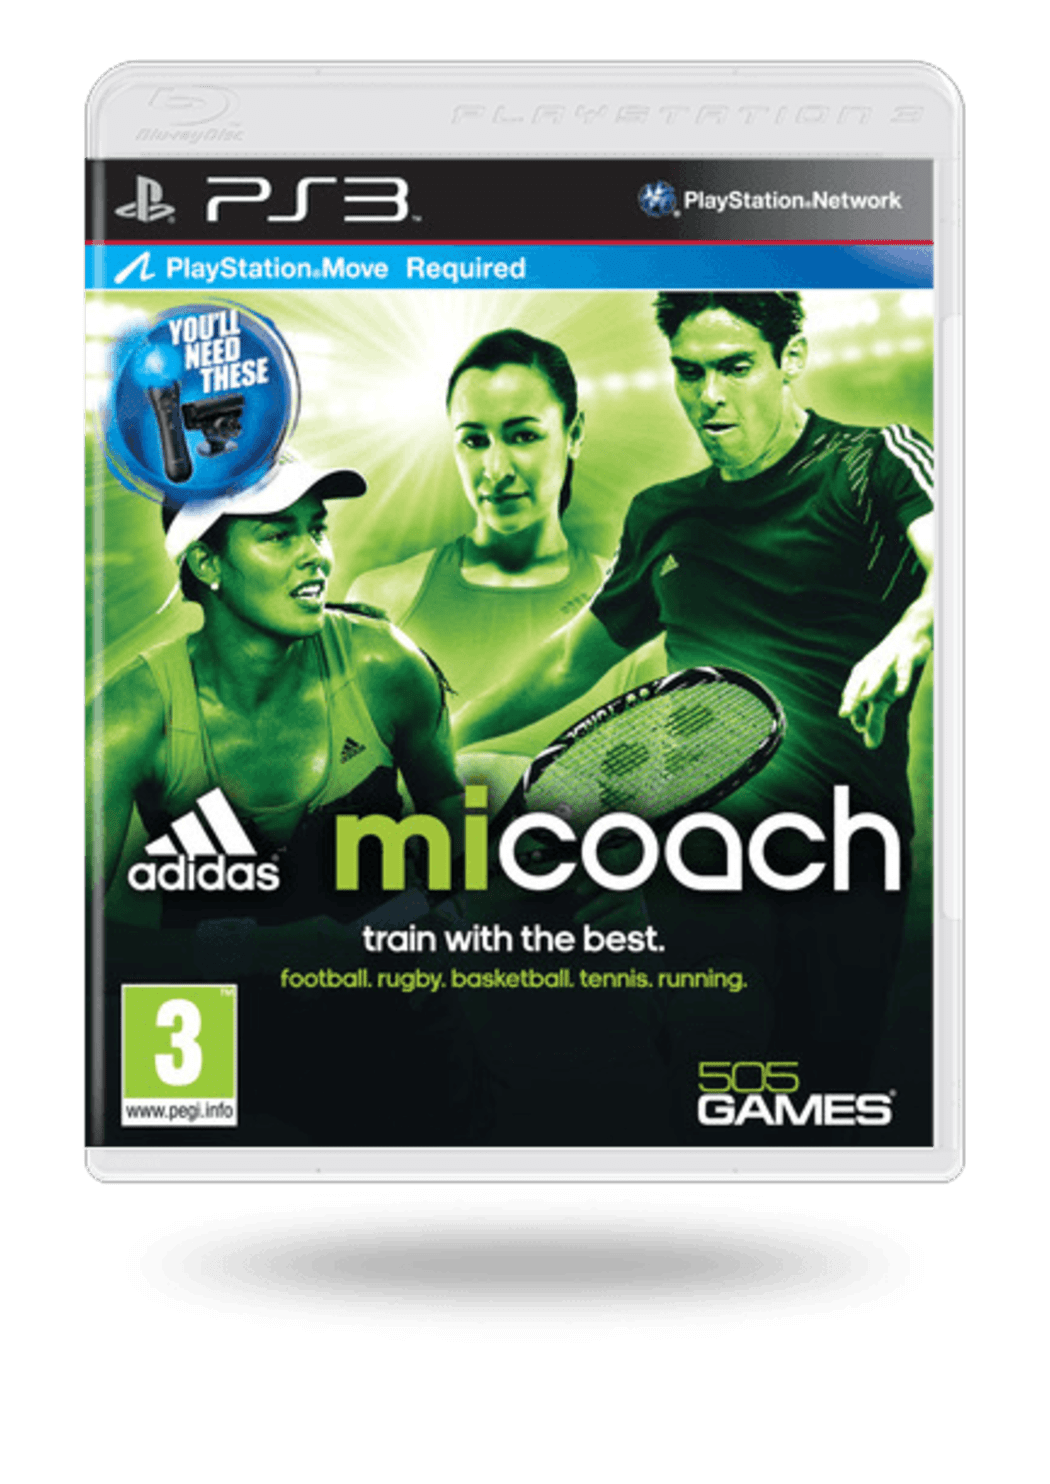 Buy adidas miCoach PS3 CD! game price | ENEBA